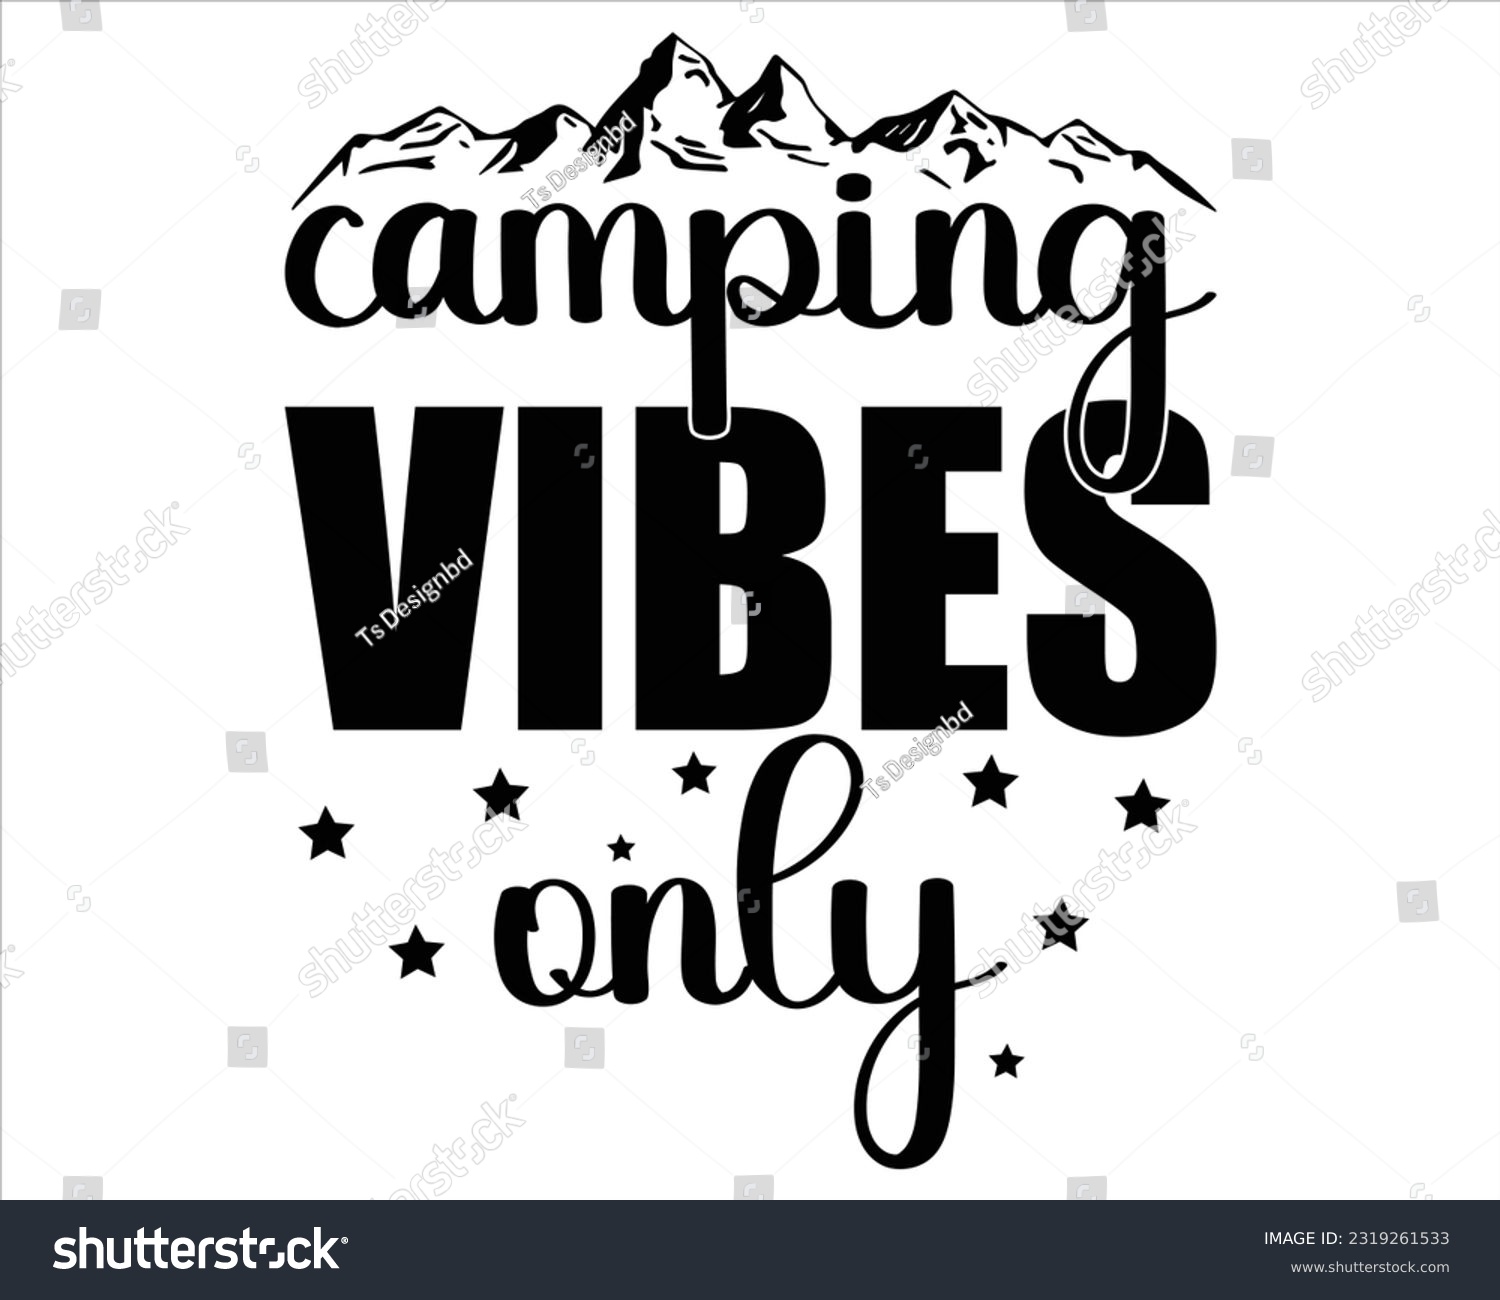 SVG of Camping Vibes Only Svg Design, Hiking Svg Design, Mountain illustration, outdoor adventure ,Outdoor Adventure Inspiring Motivation Quote, camping, hiking svg